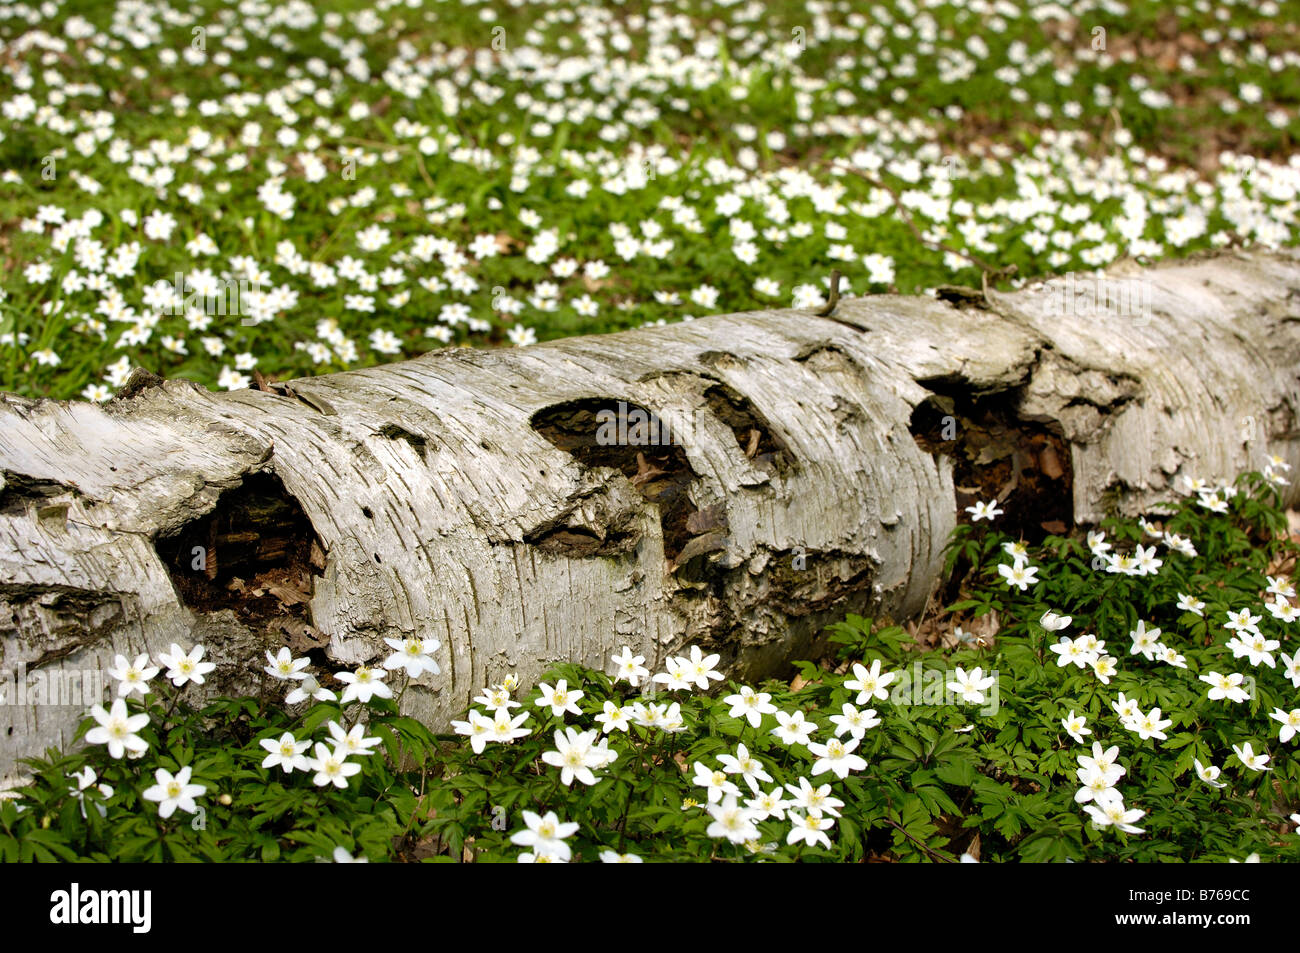 anemone nemorosa wood anemone windflower smell fox anemone sylvie flower blooming blossom Stock Photo